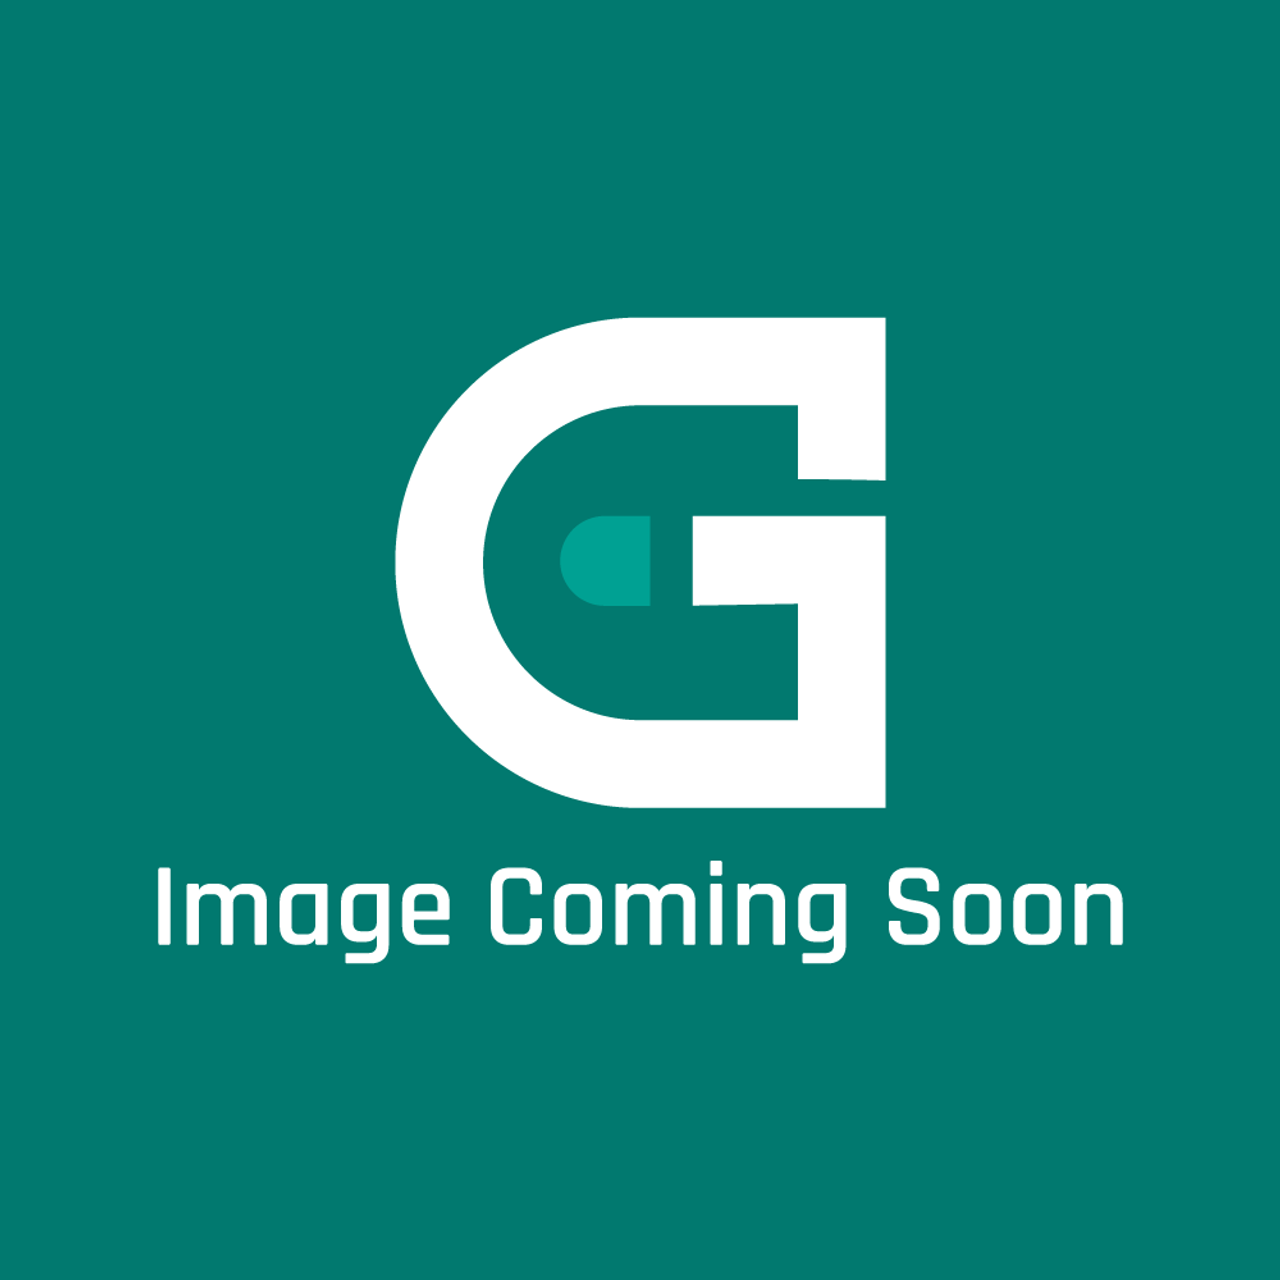 Garland 4529707 - Kit, Usr 45, Gas/Elec Cn Tl Repla - Image Coming Soon!